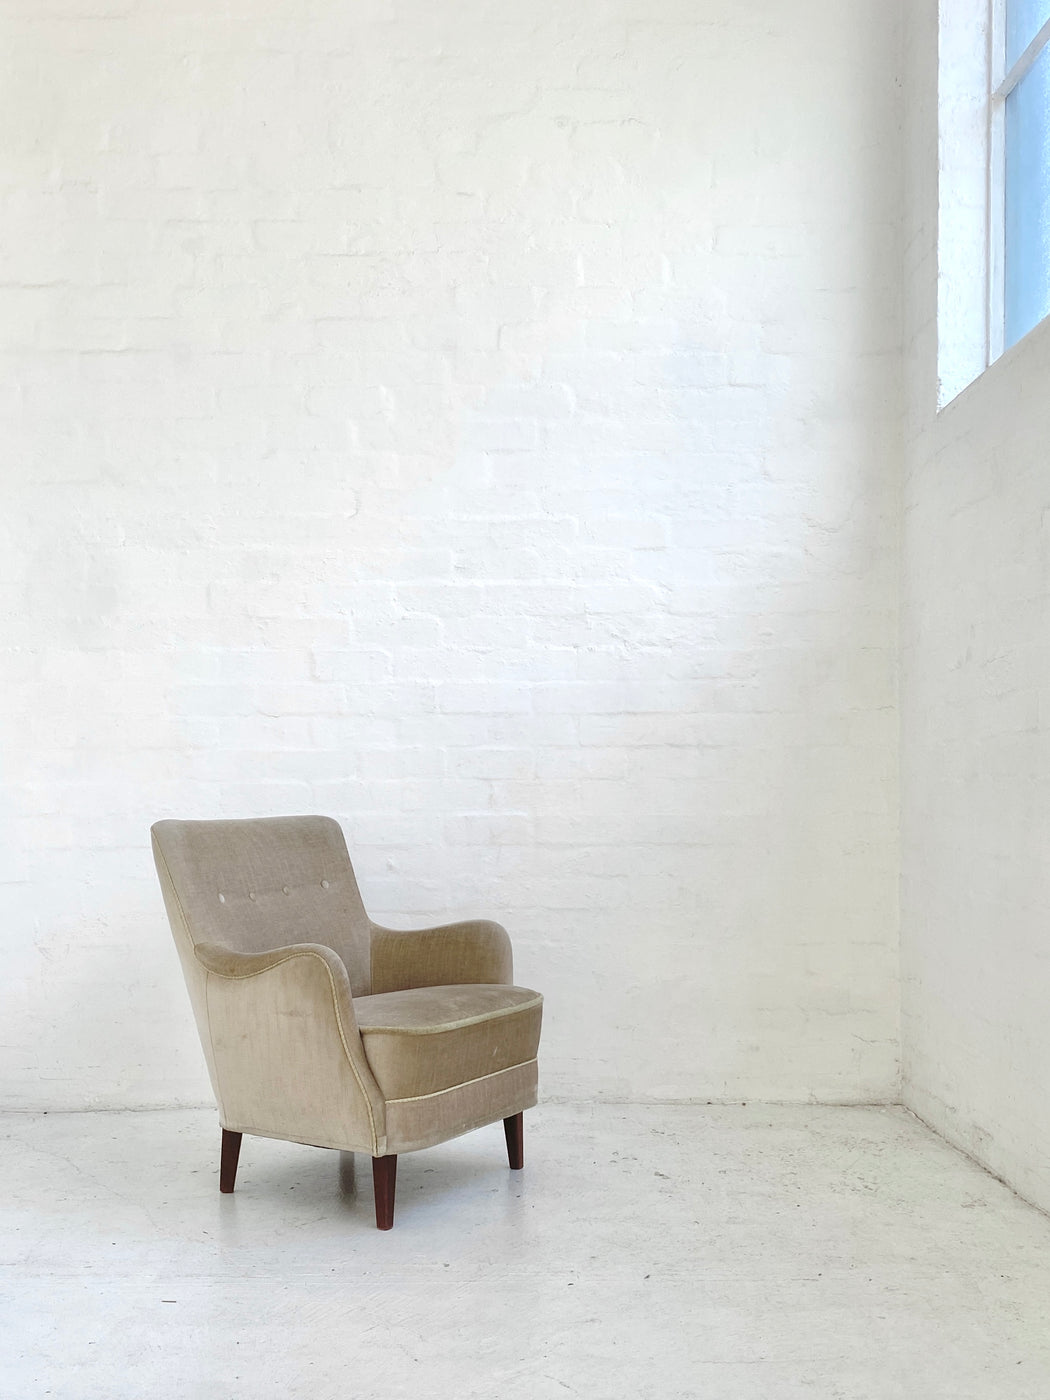 Classic Danish Lounge Chair